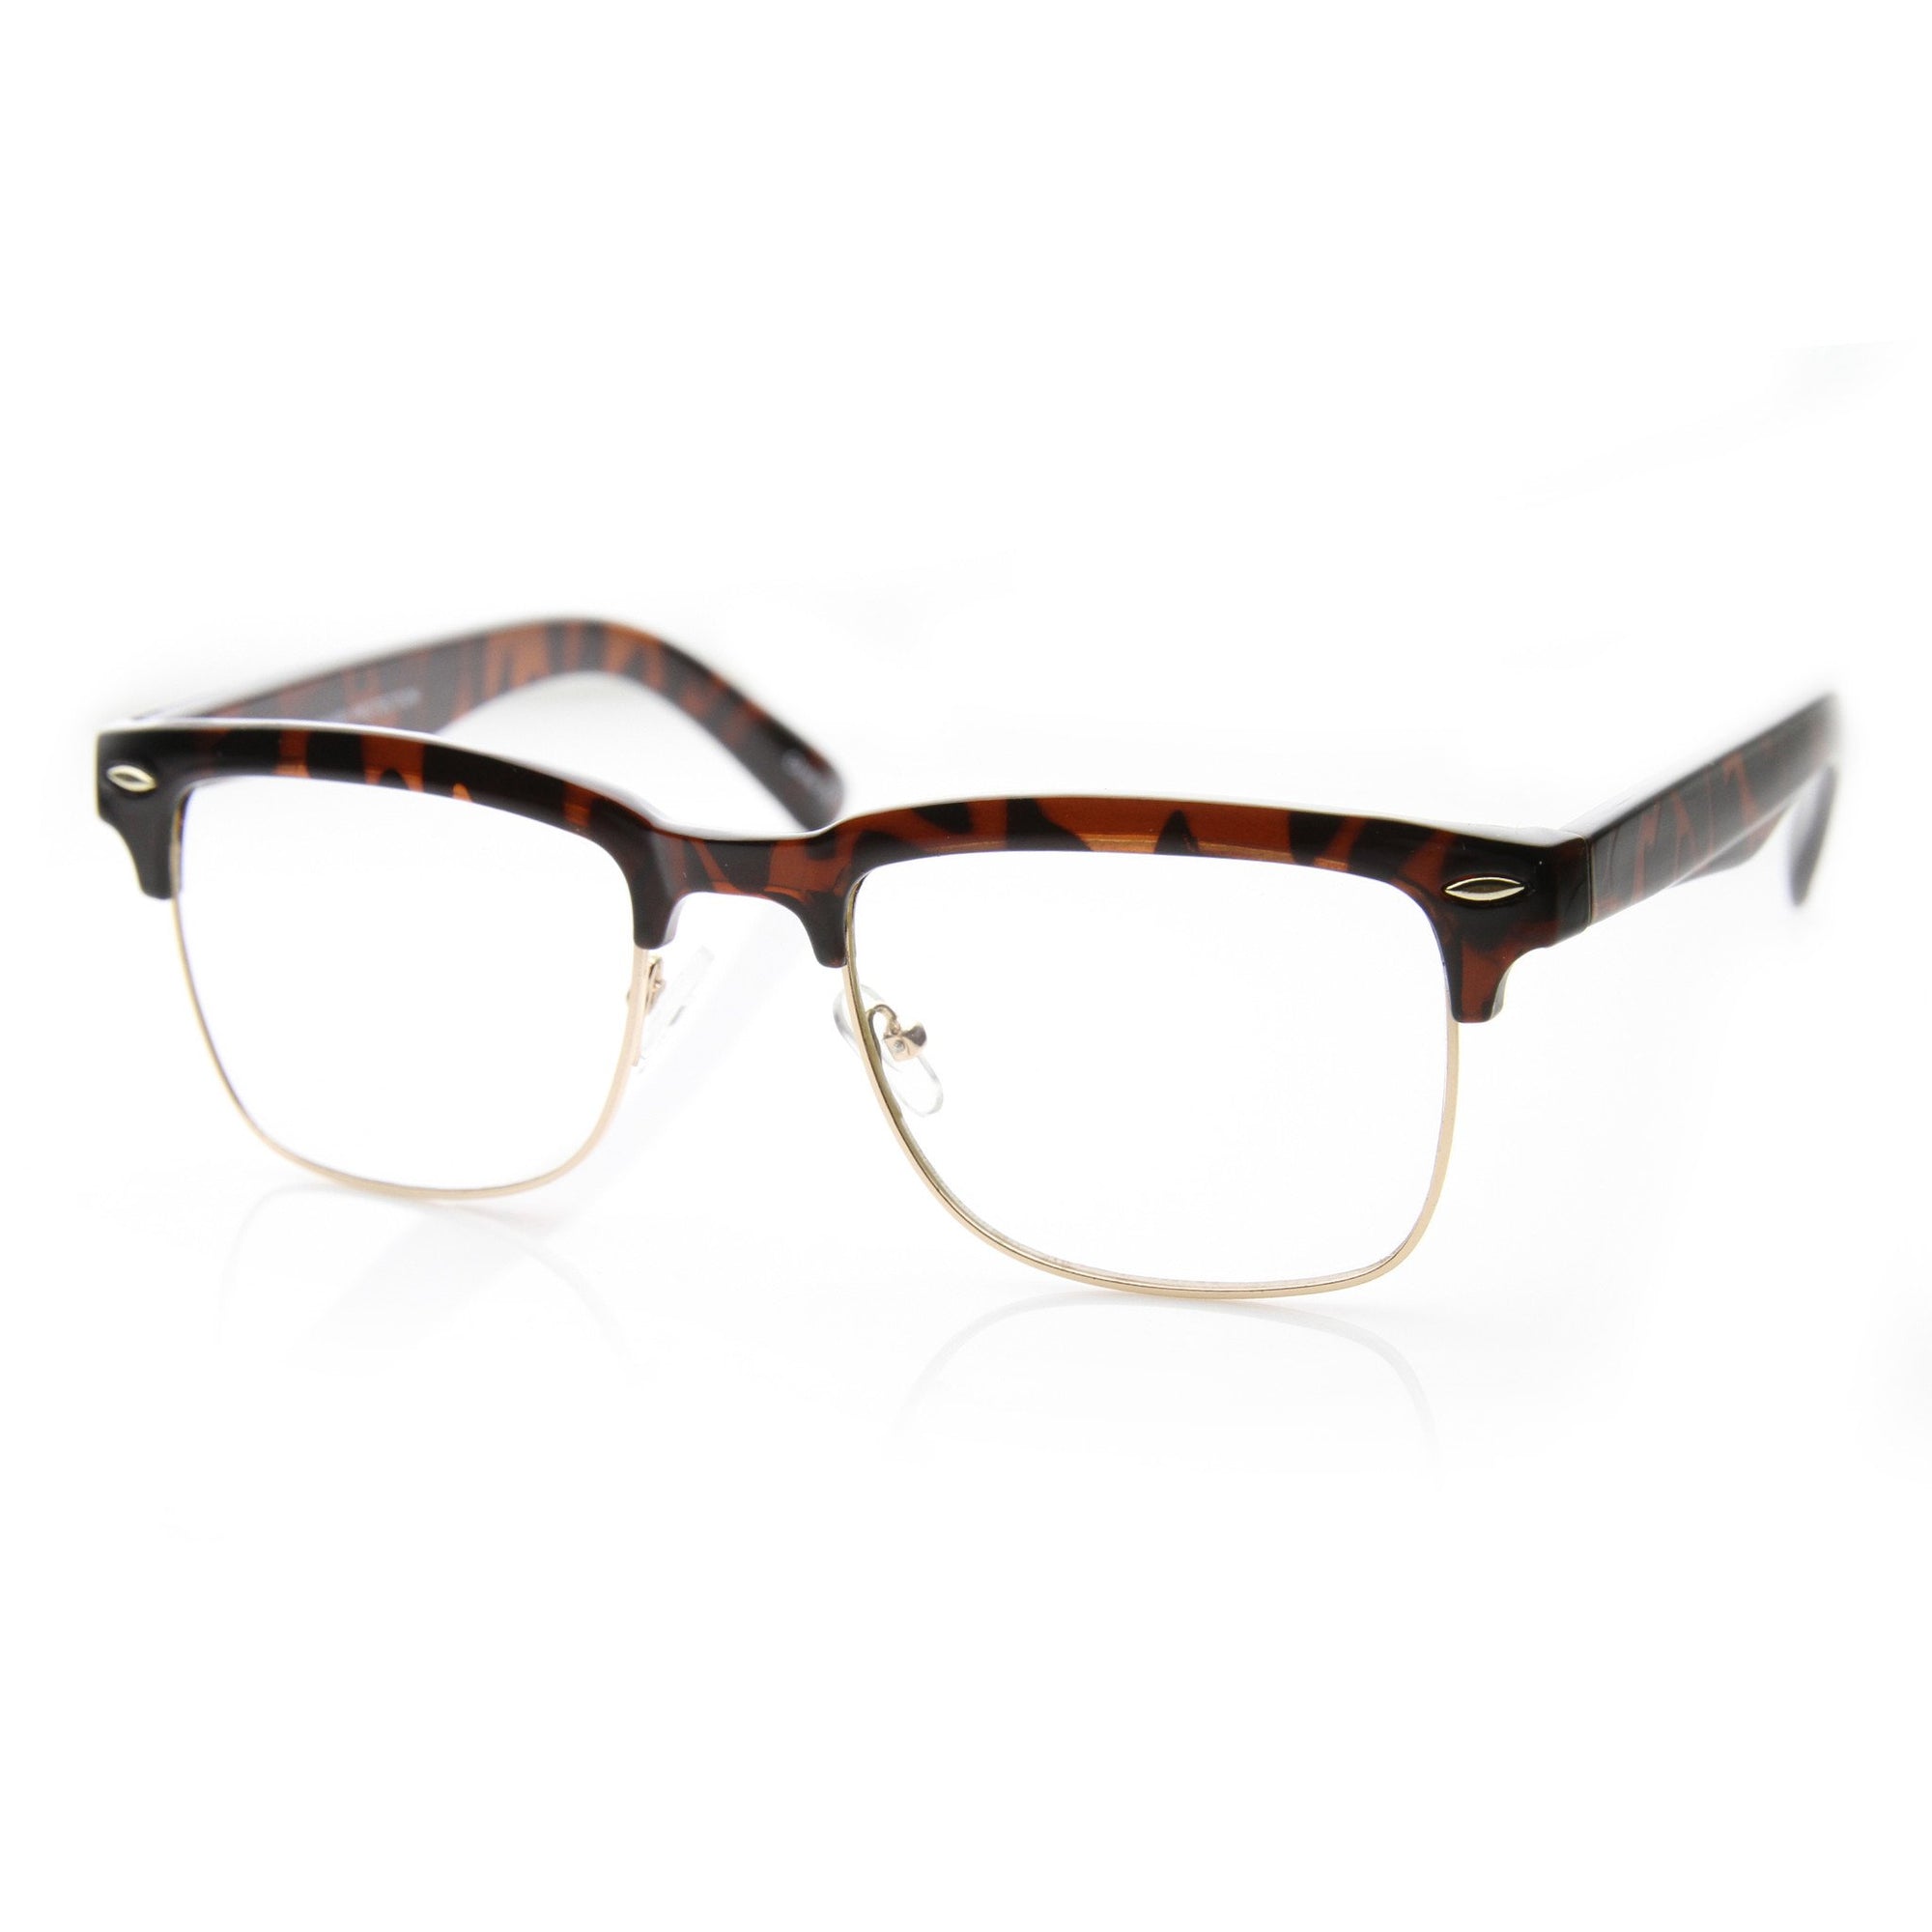 Vintage Inspired Clubmaster Half Frame Glasses Zerouv 